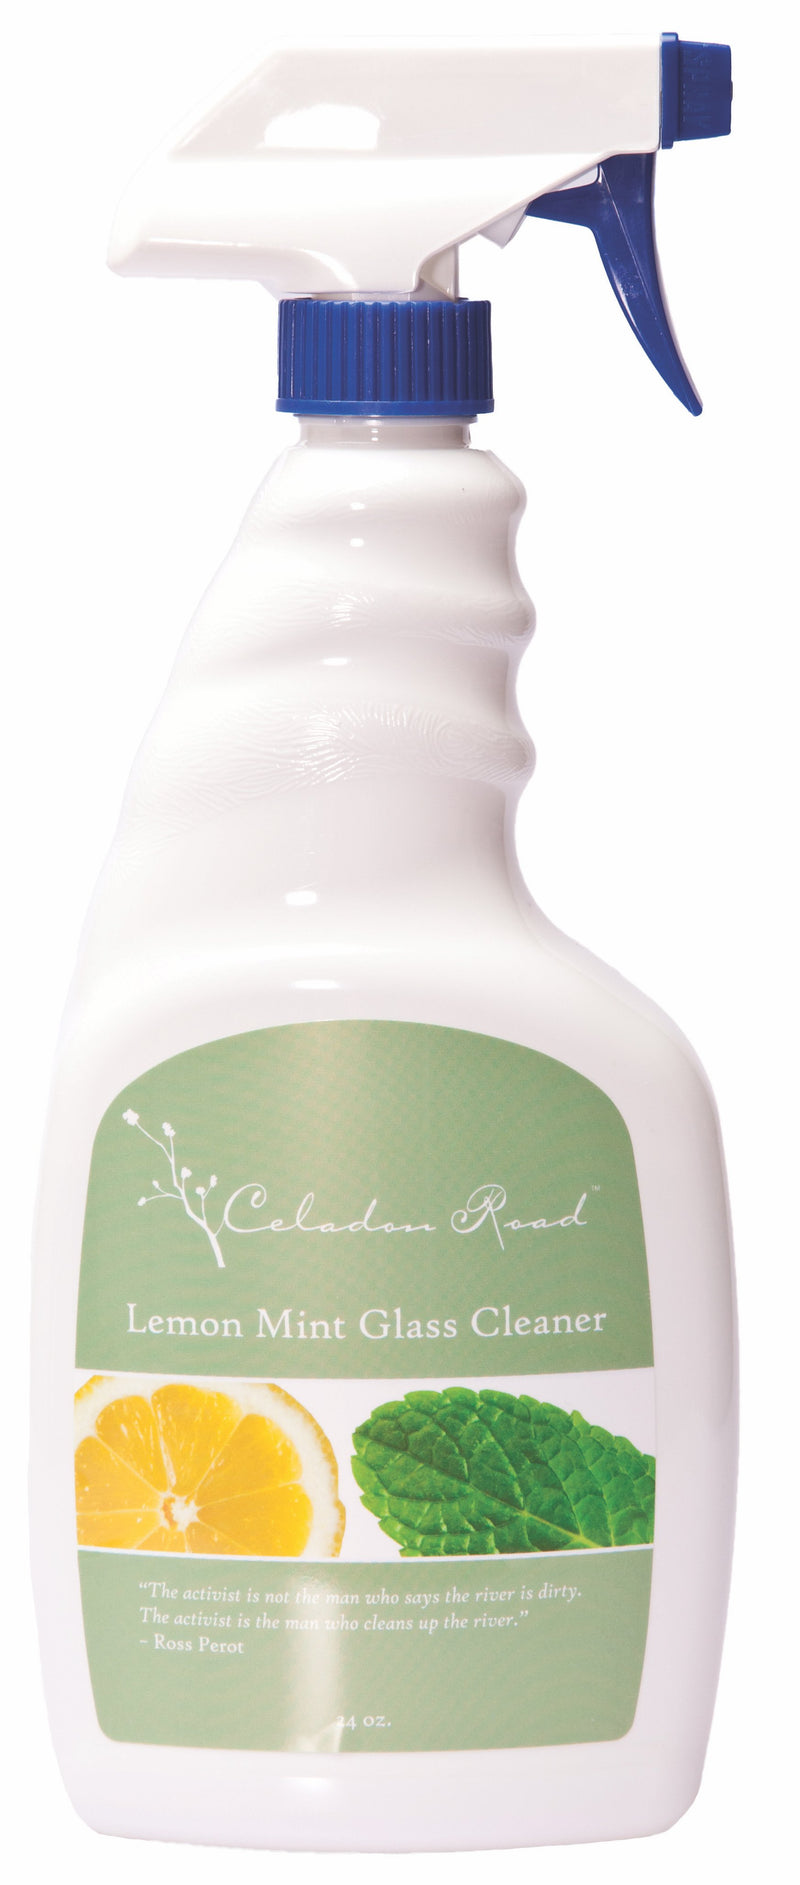 Lemon Mint Glass Cleaner- Celadon Road- www.celadonroad.com